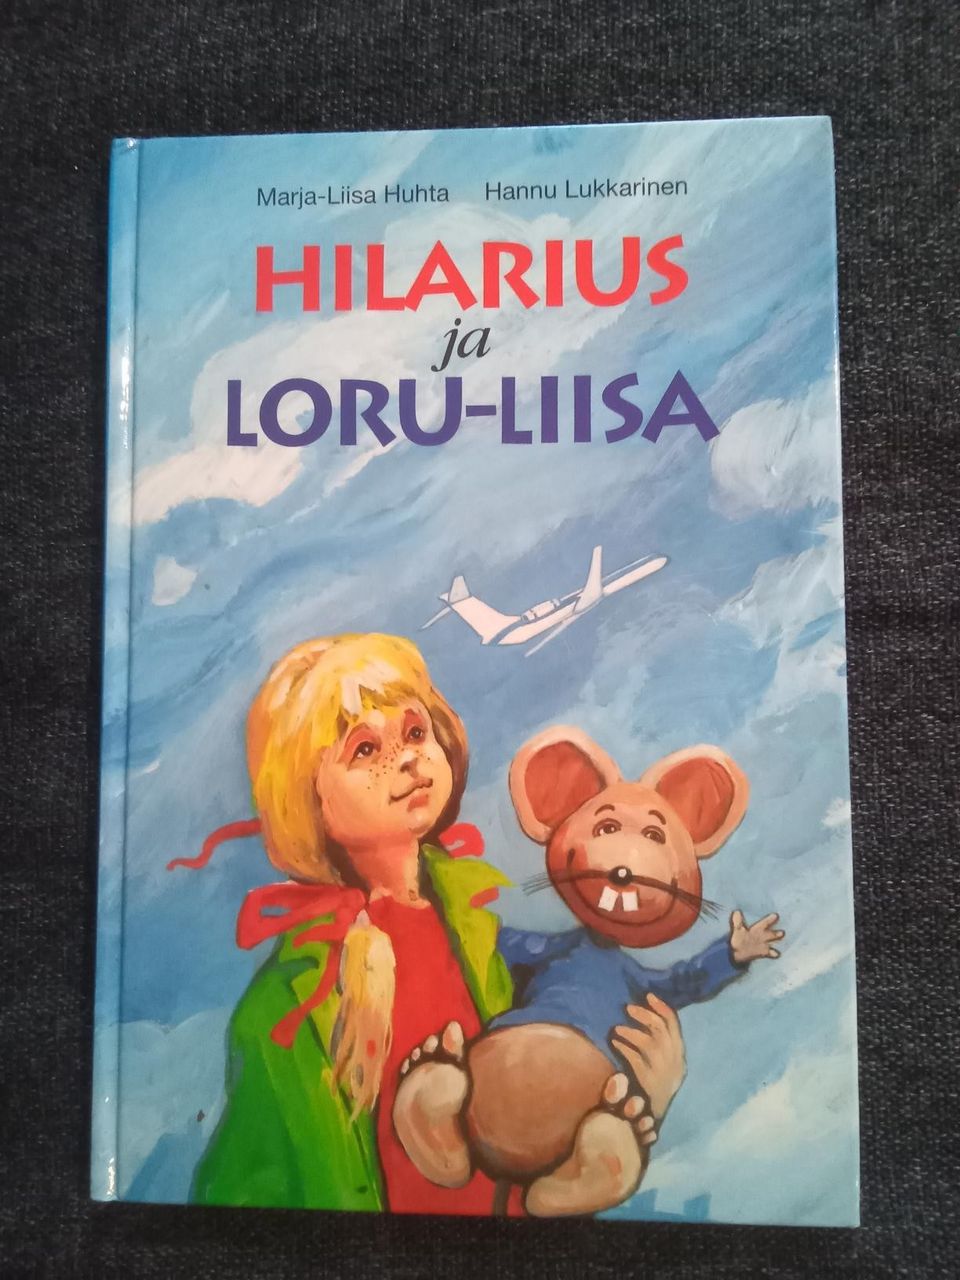 Hilarius ja Loru- Liisa lasten kirja spk